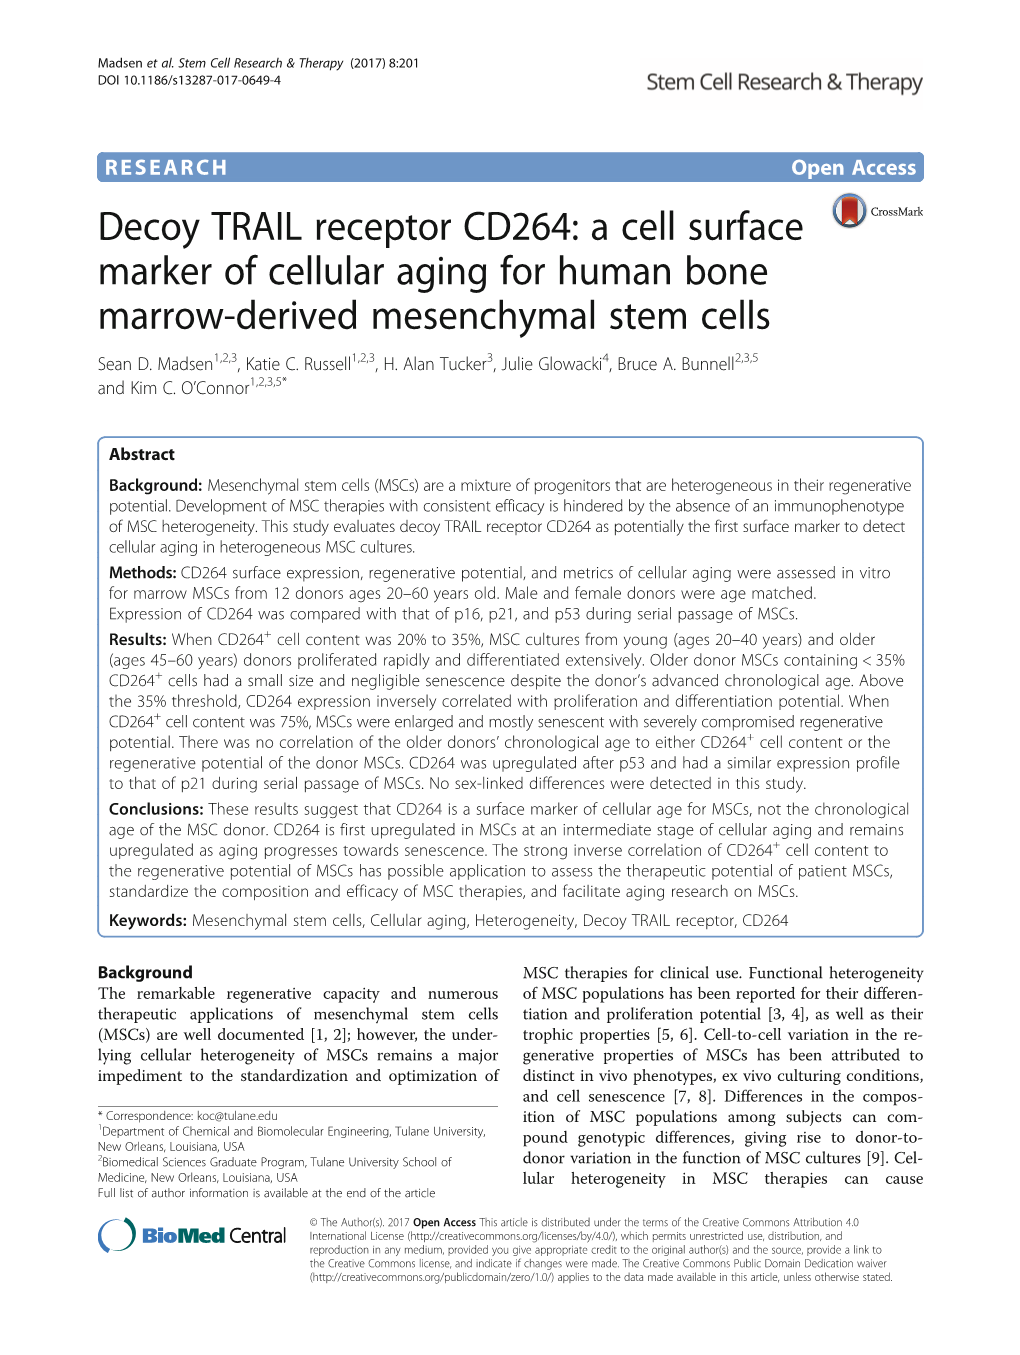 Decoy TRAIL Receptor CD264: a Cell Surface Marker of Cellular Aging for Human Bone Marrow-Derived Mesenchymal Stem Cells Sean D